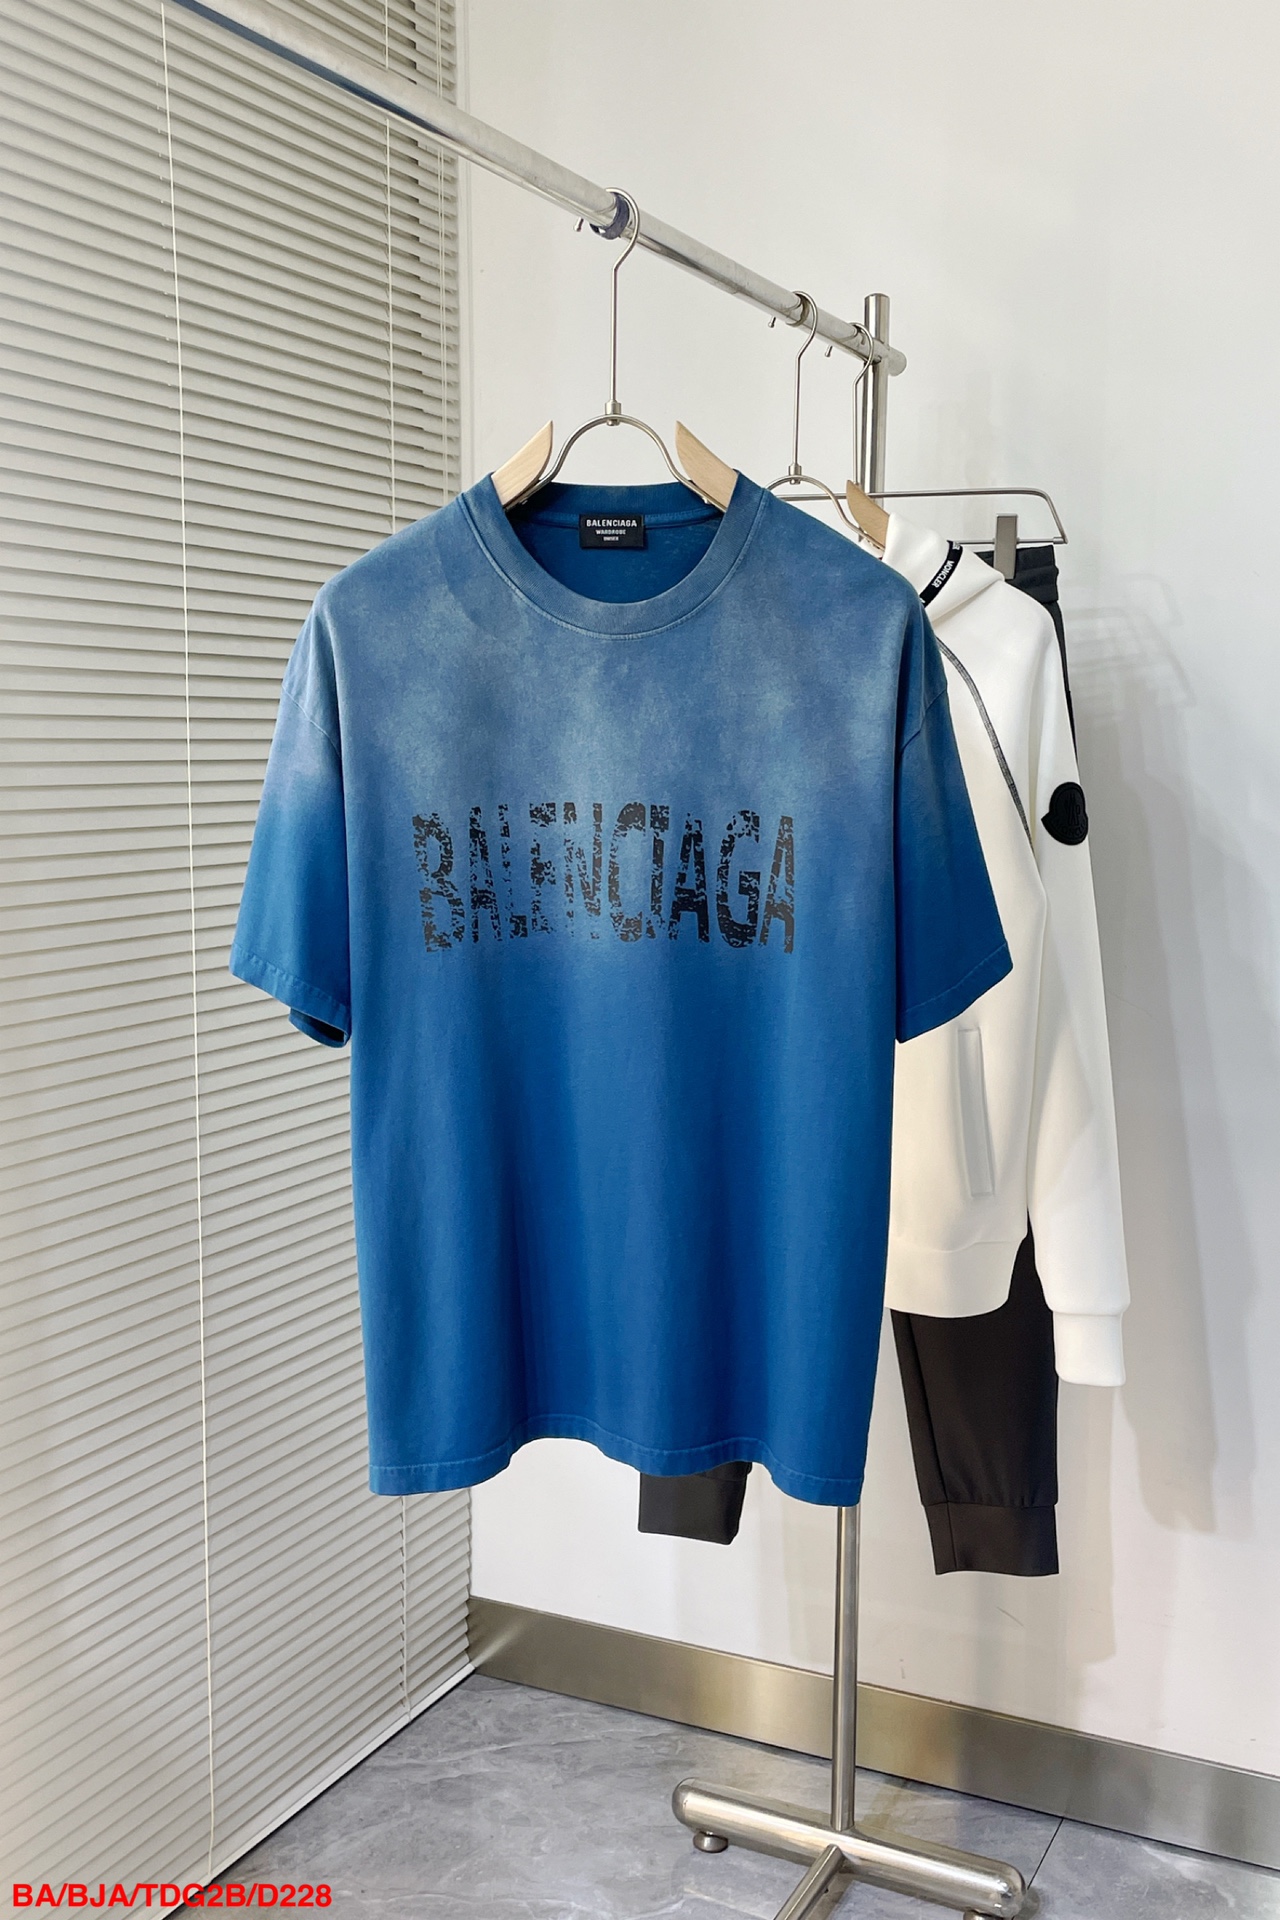 Balenciaga Best
 Kleding T-Shirt Zwart Wit Afdrukken Katoen Lentecollectie Korte mouw